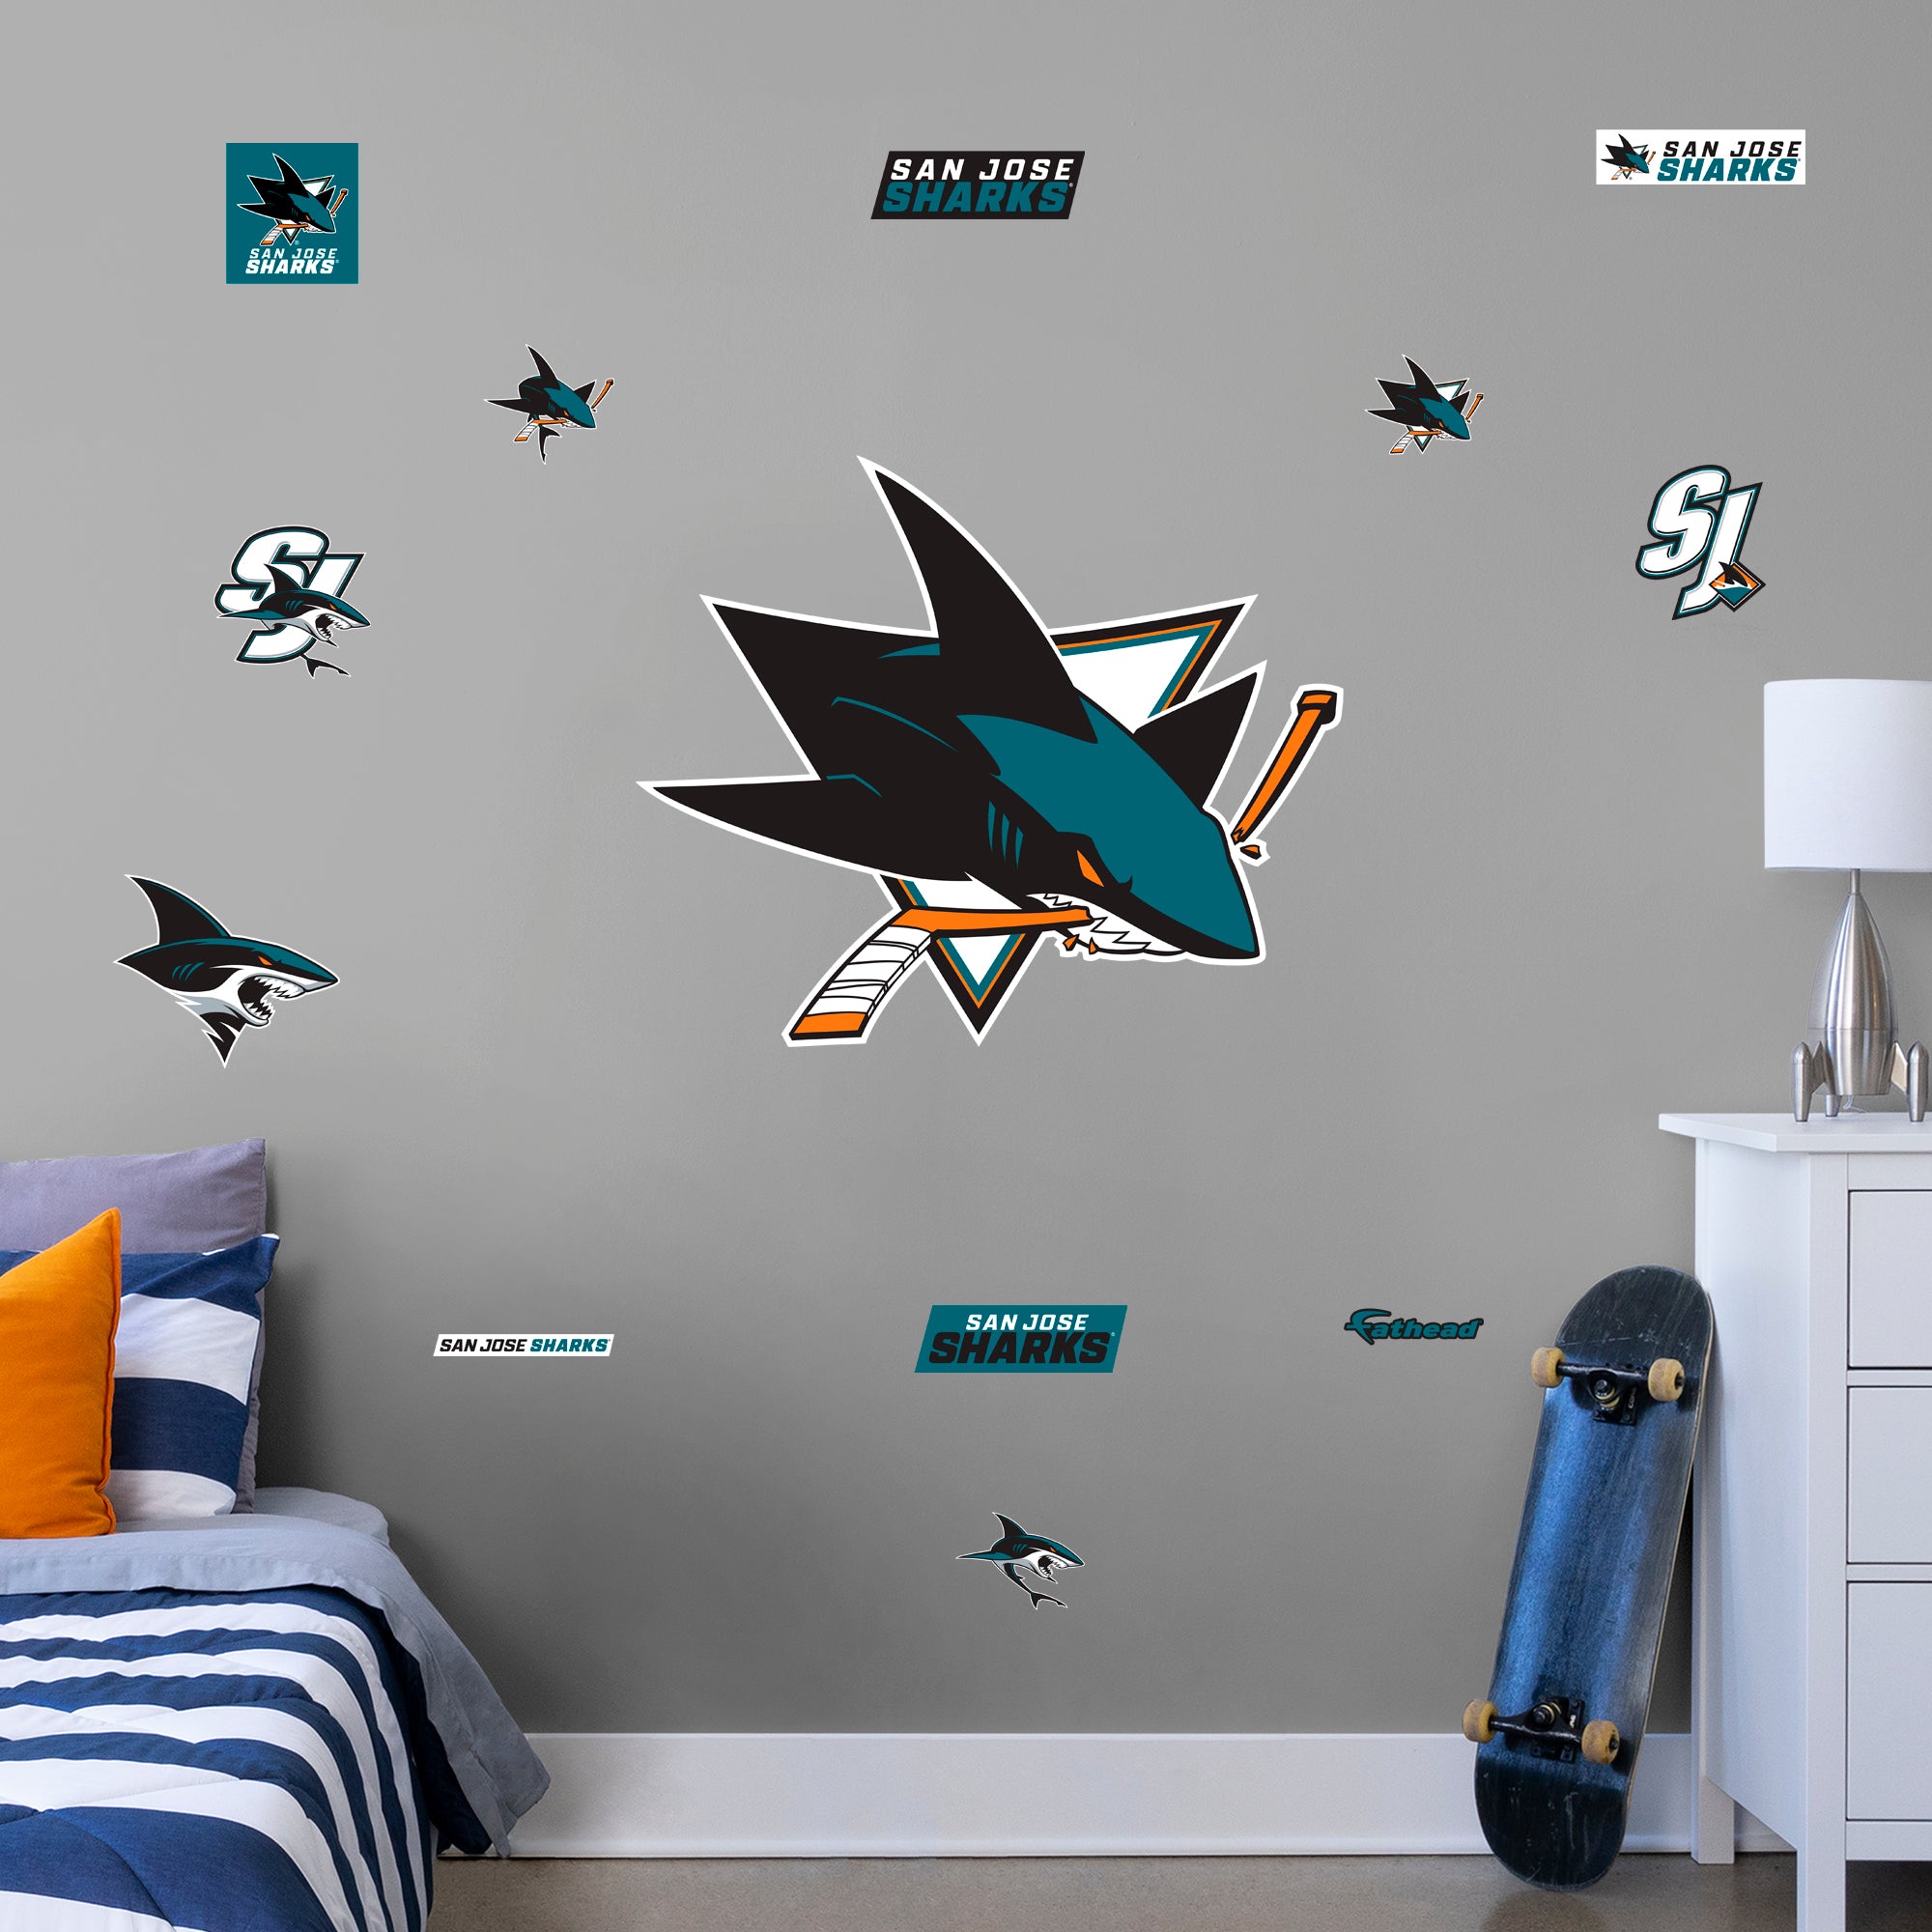 San Jose Sharks - Fresh wallpapers coming in hot.